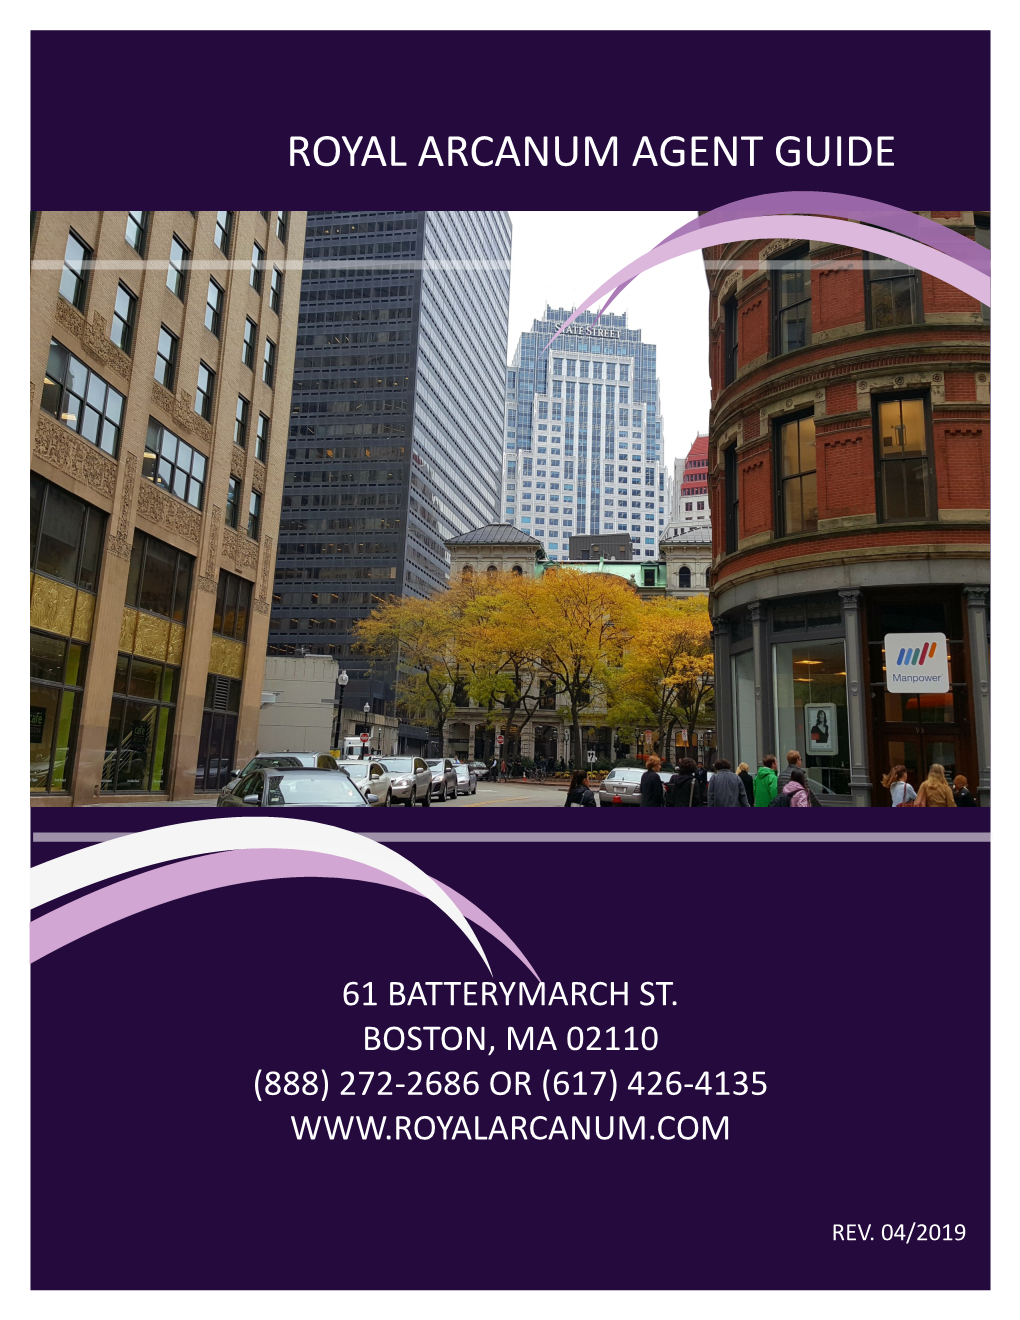 Royal Arcanum Agent Guide